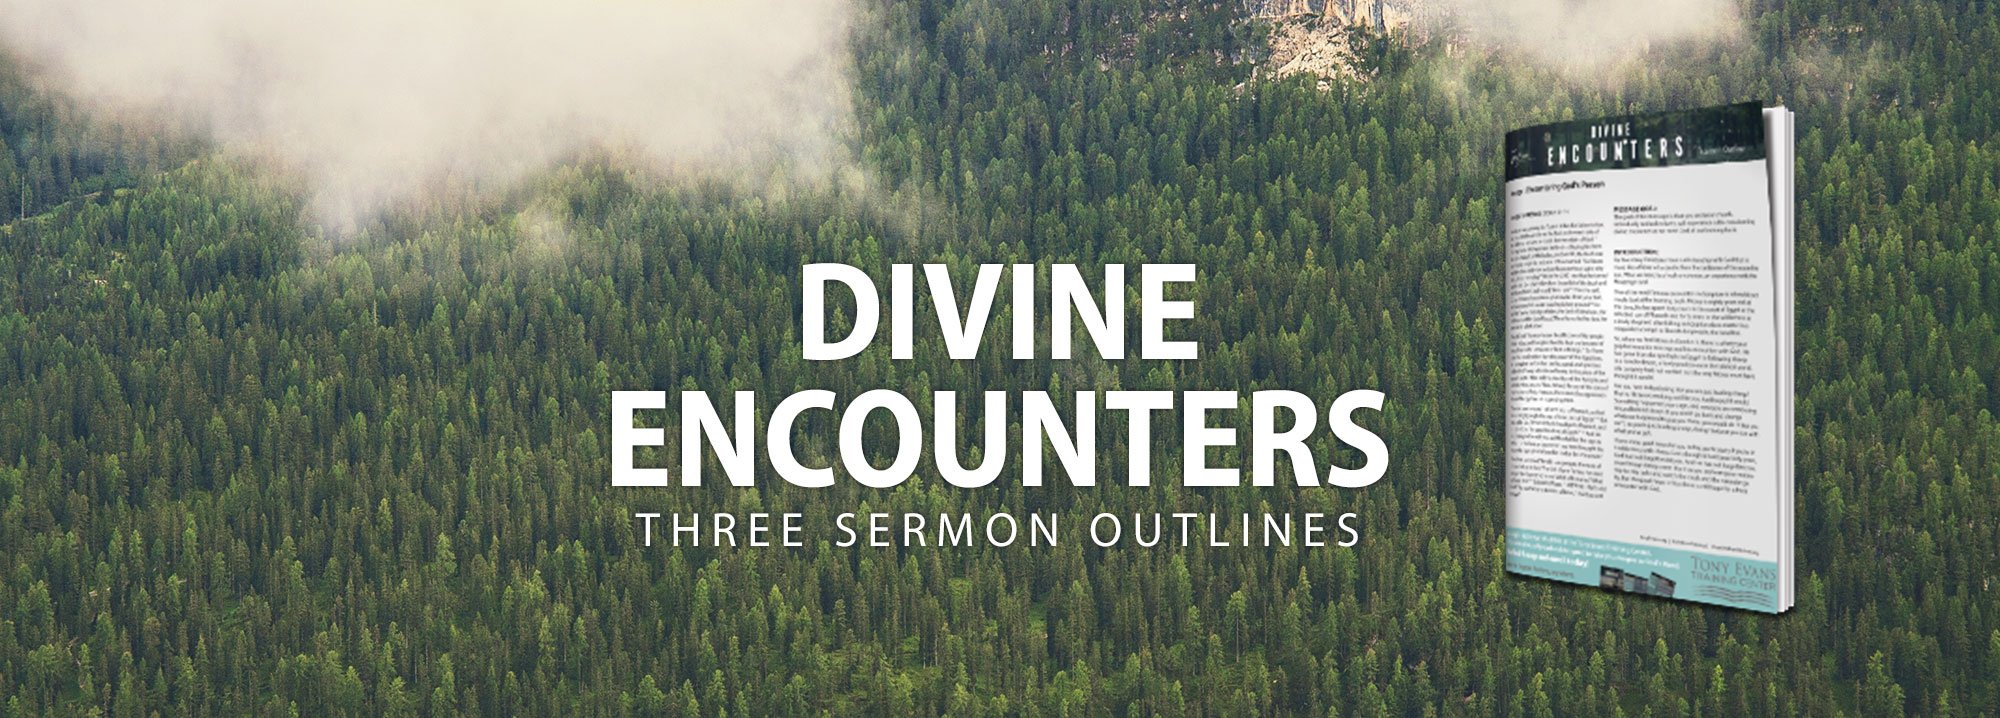 Divine Encounters - Three Sermon Outlines